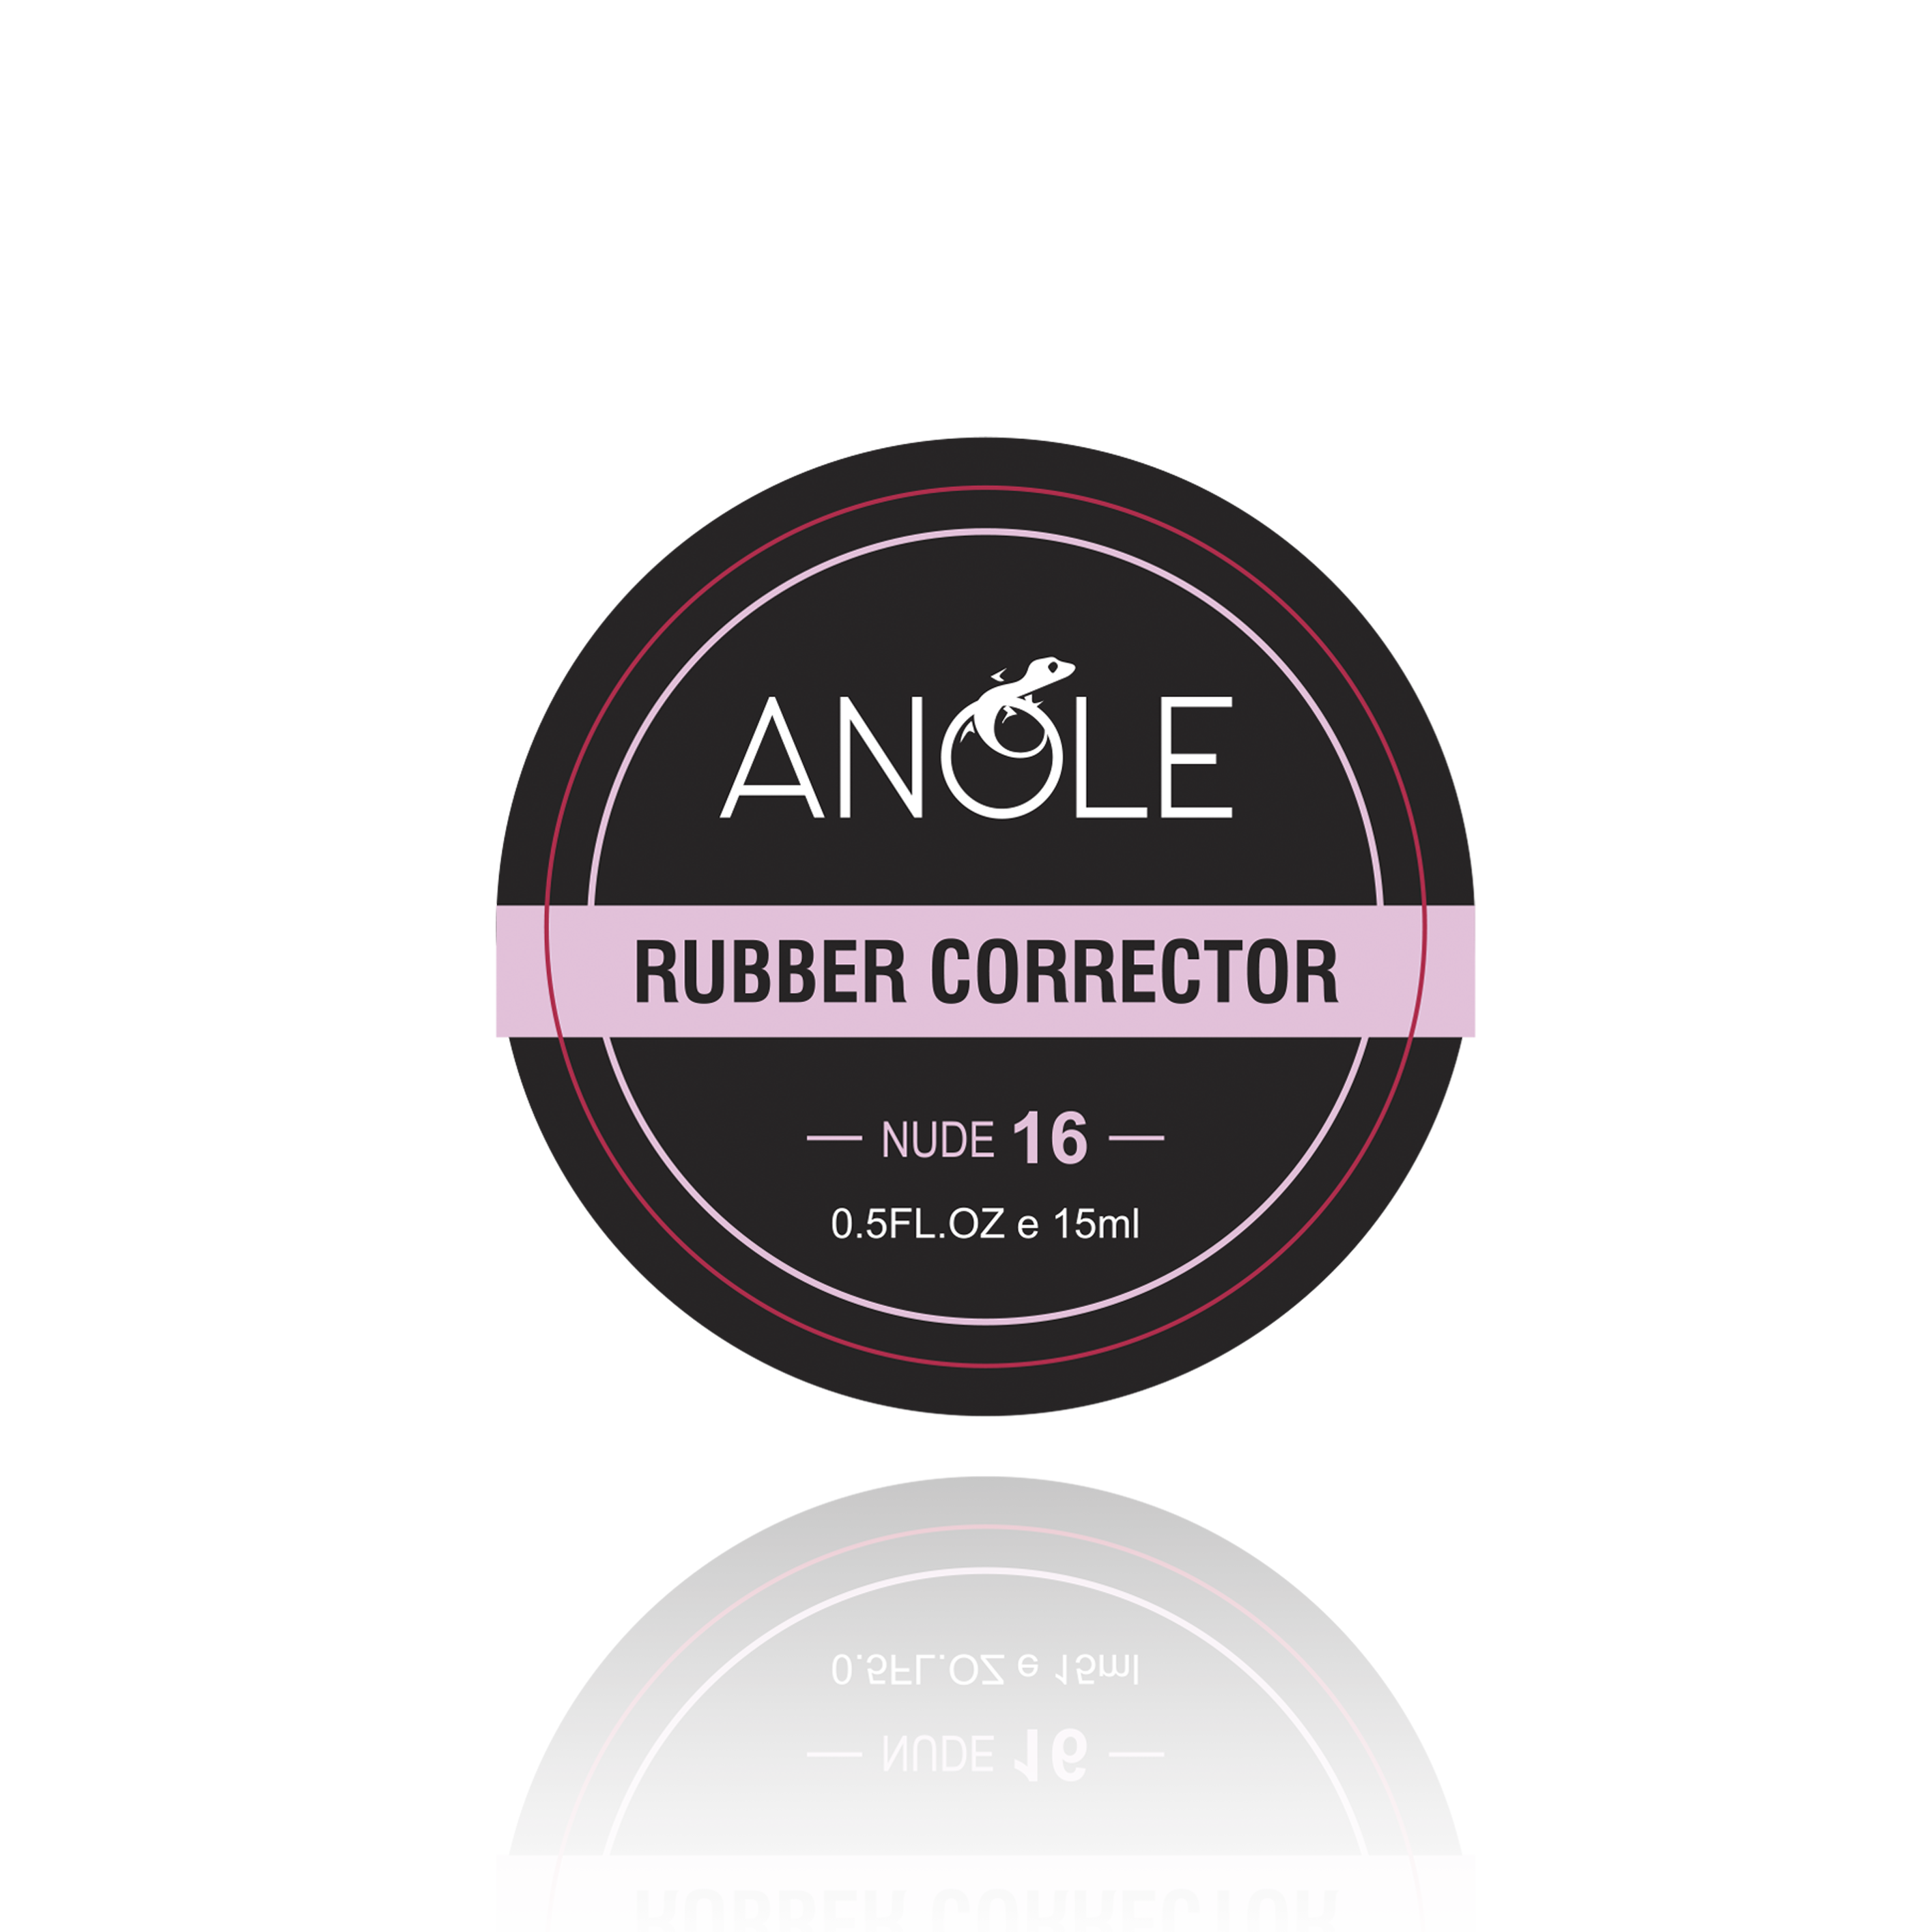 anole rubber corrector nude 16